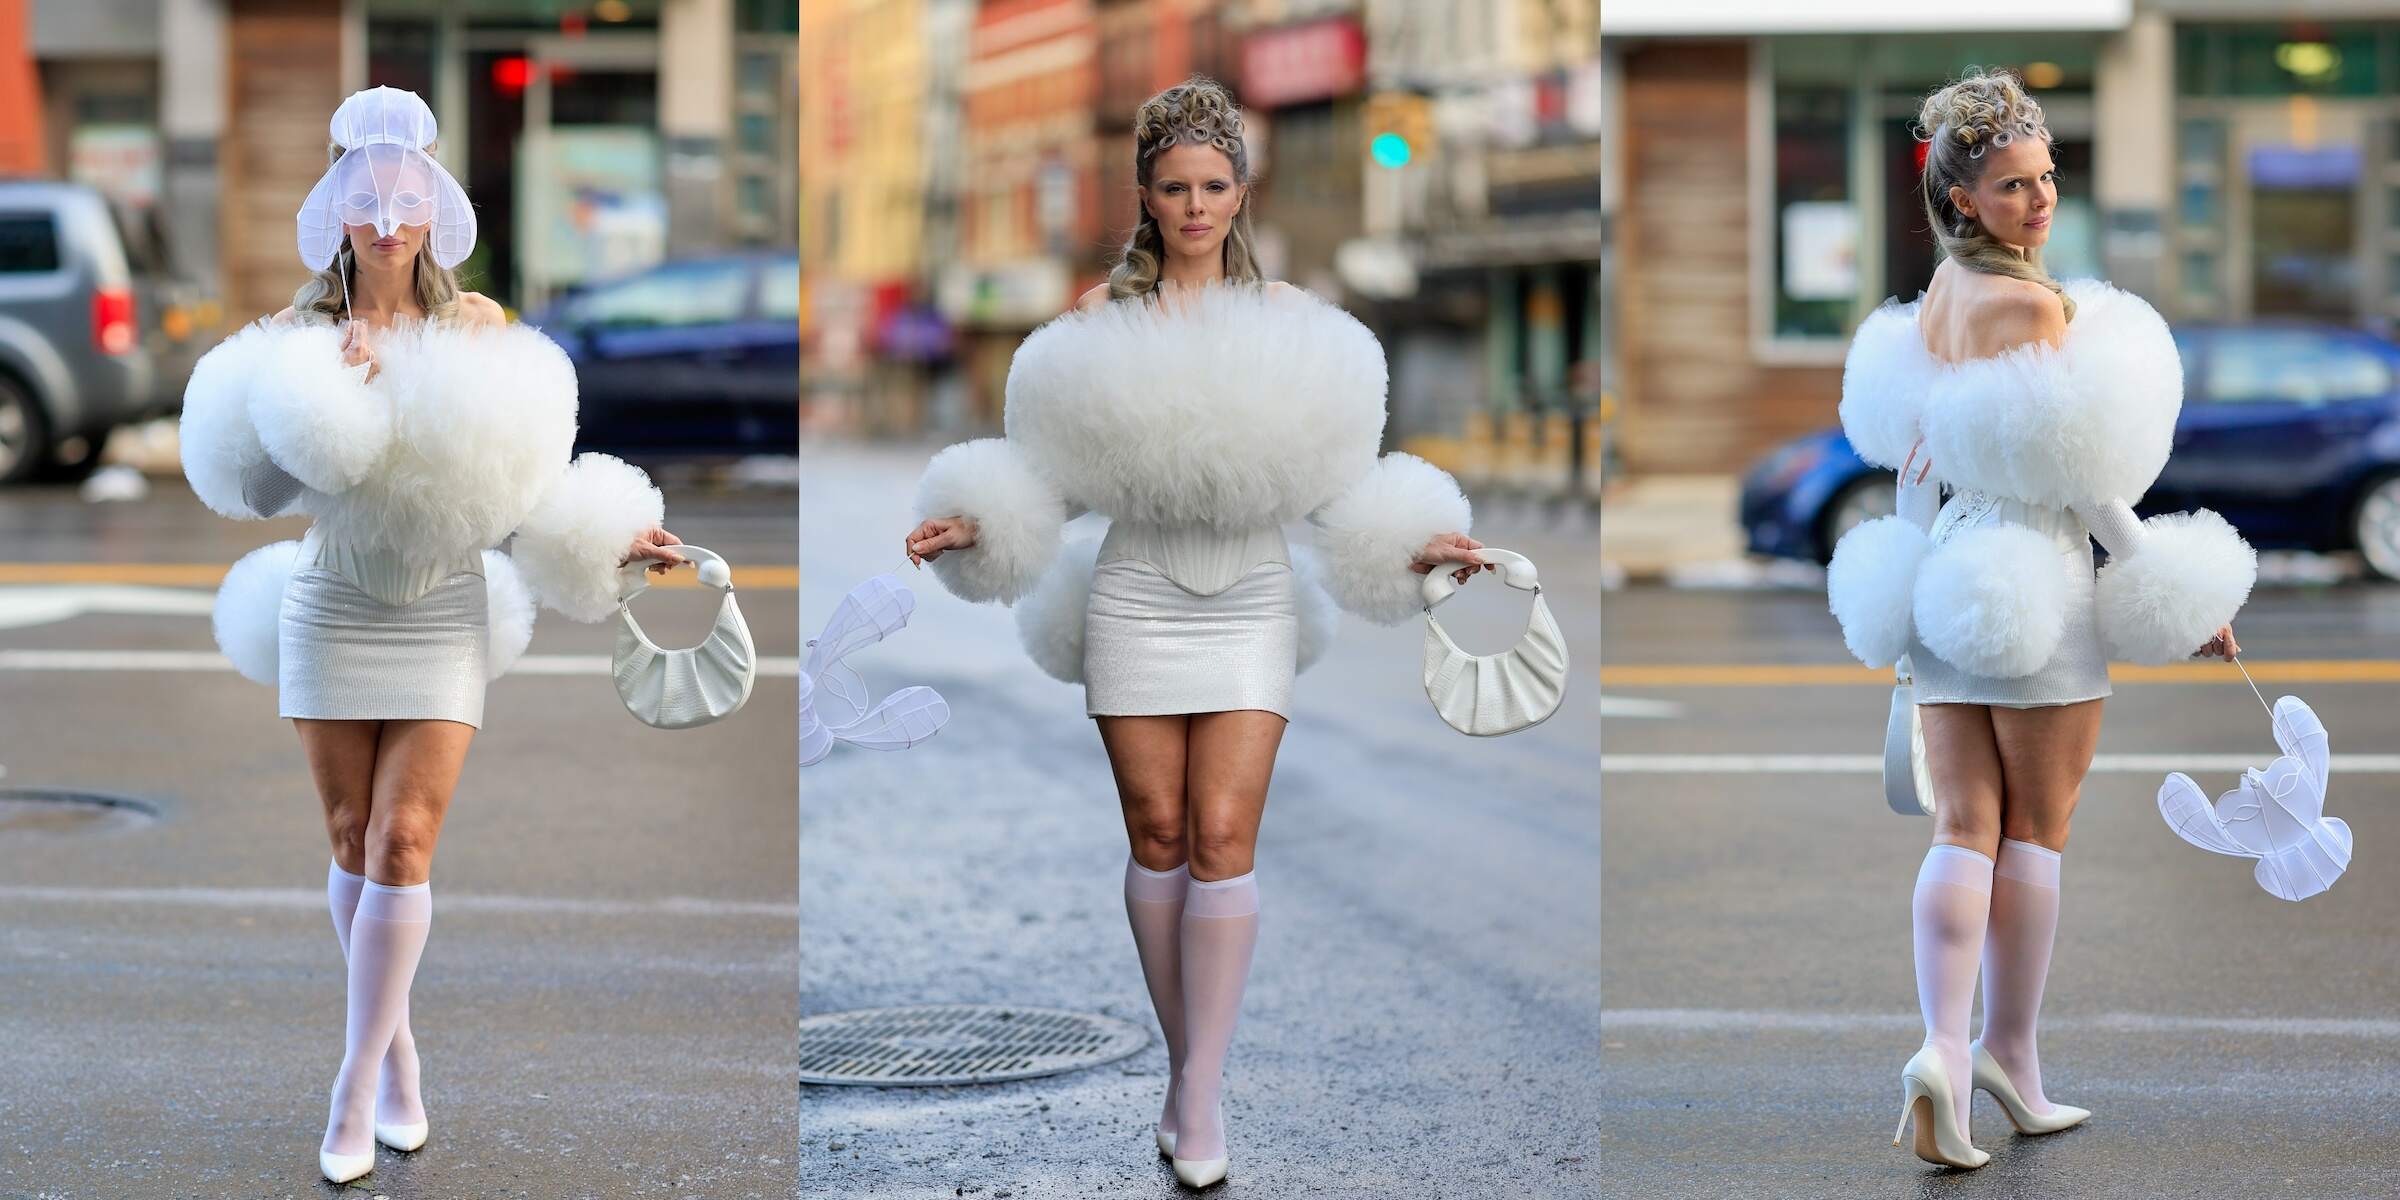 Actor Julia Fox walks the NYC streets in a white mini wedding dress